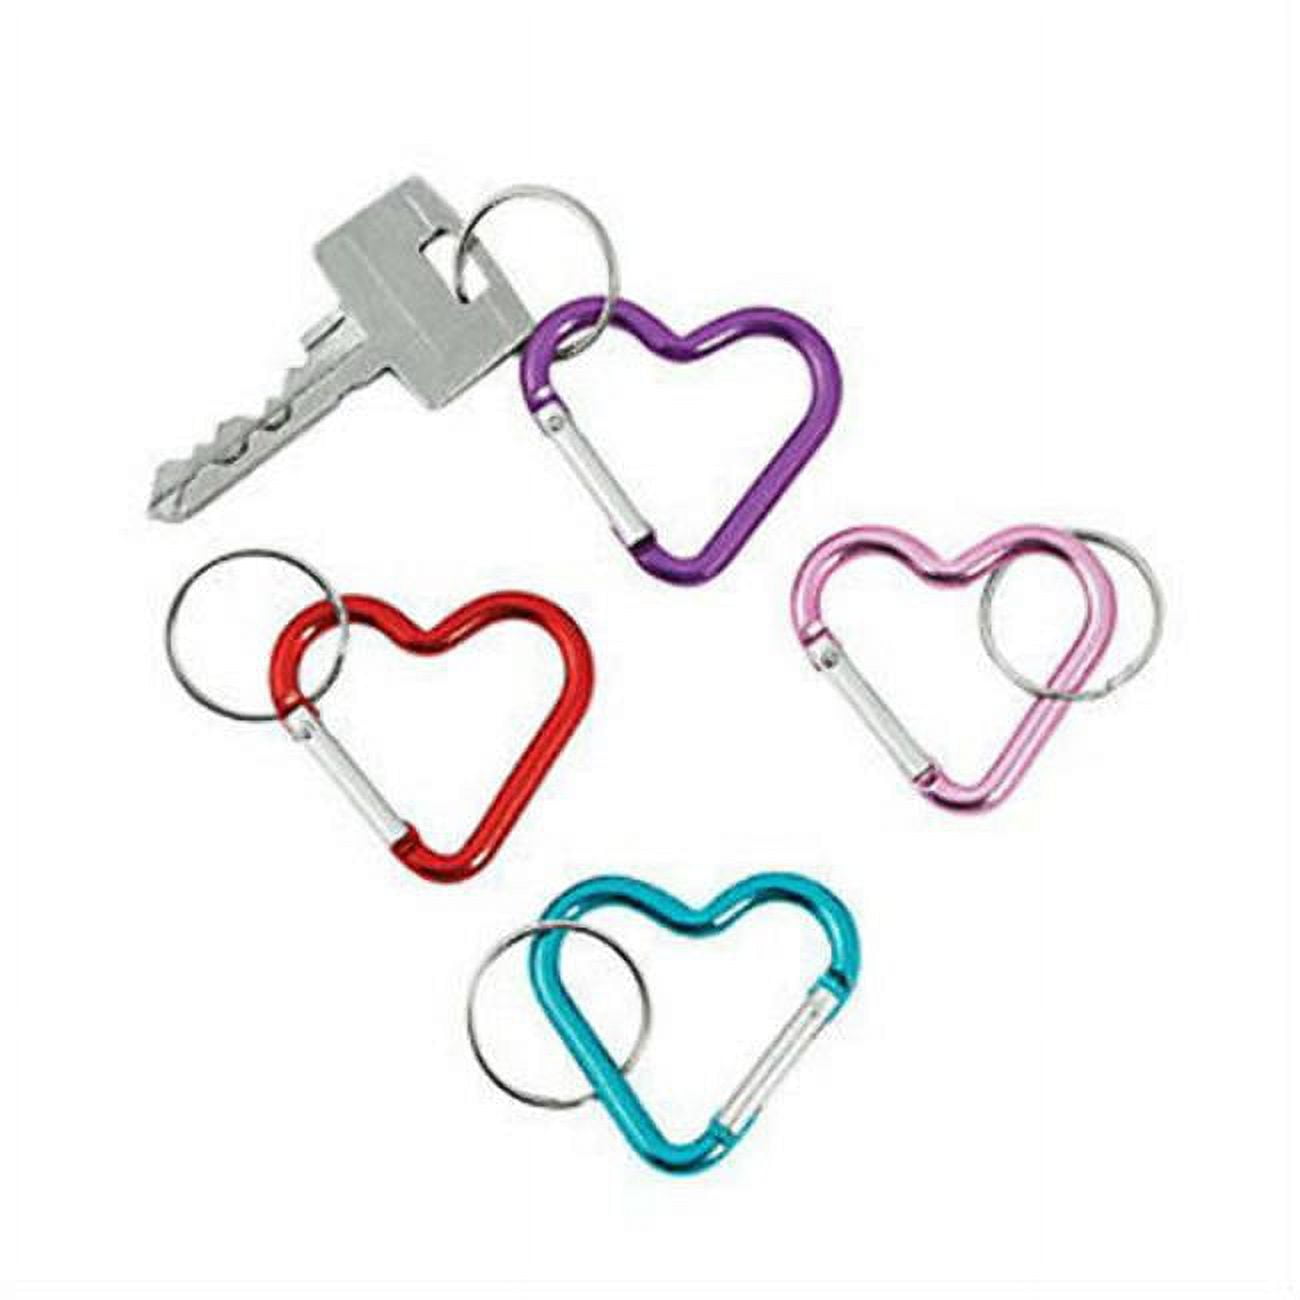 1.75 Heart Shaped Carabiner Clip Key Chain